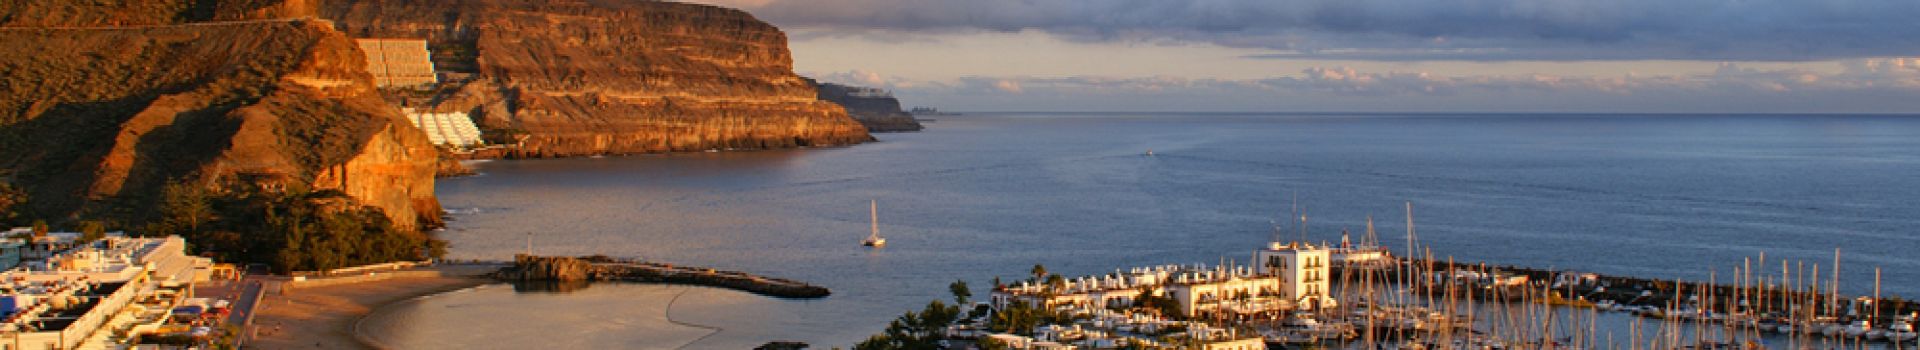 Holidays to Gran Canaria | Book Flights & Hotel | Cassidy Travel